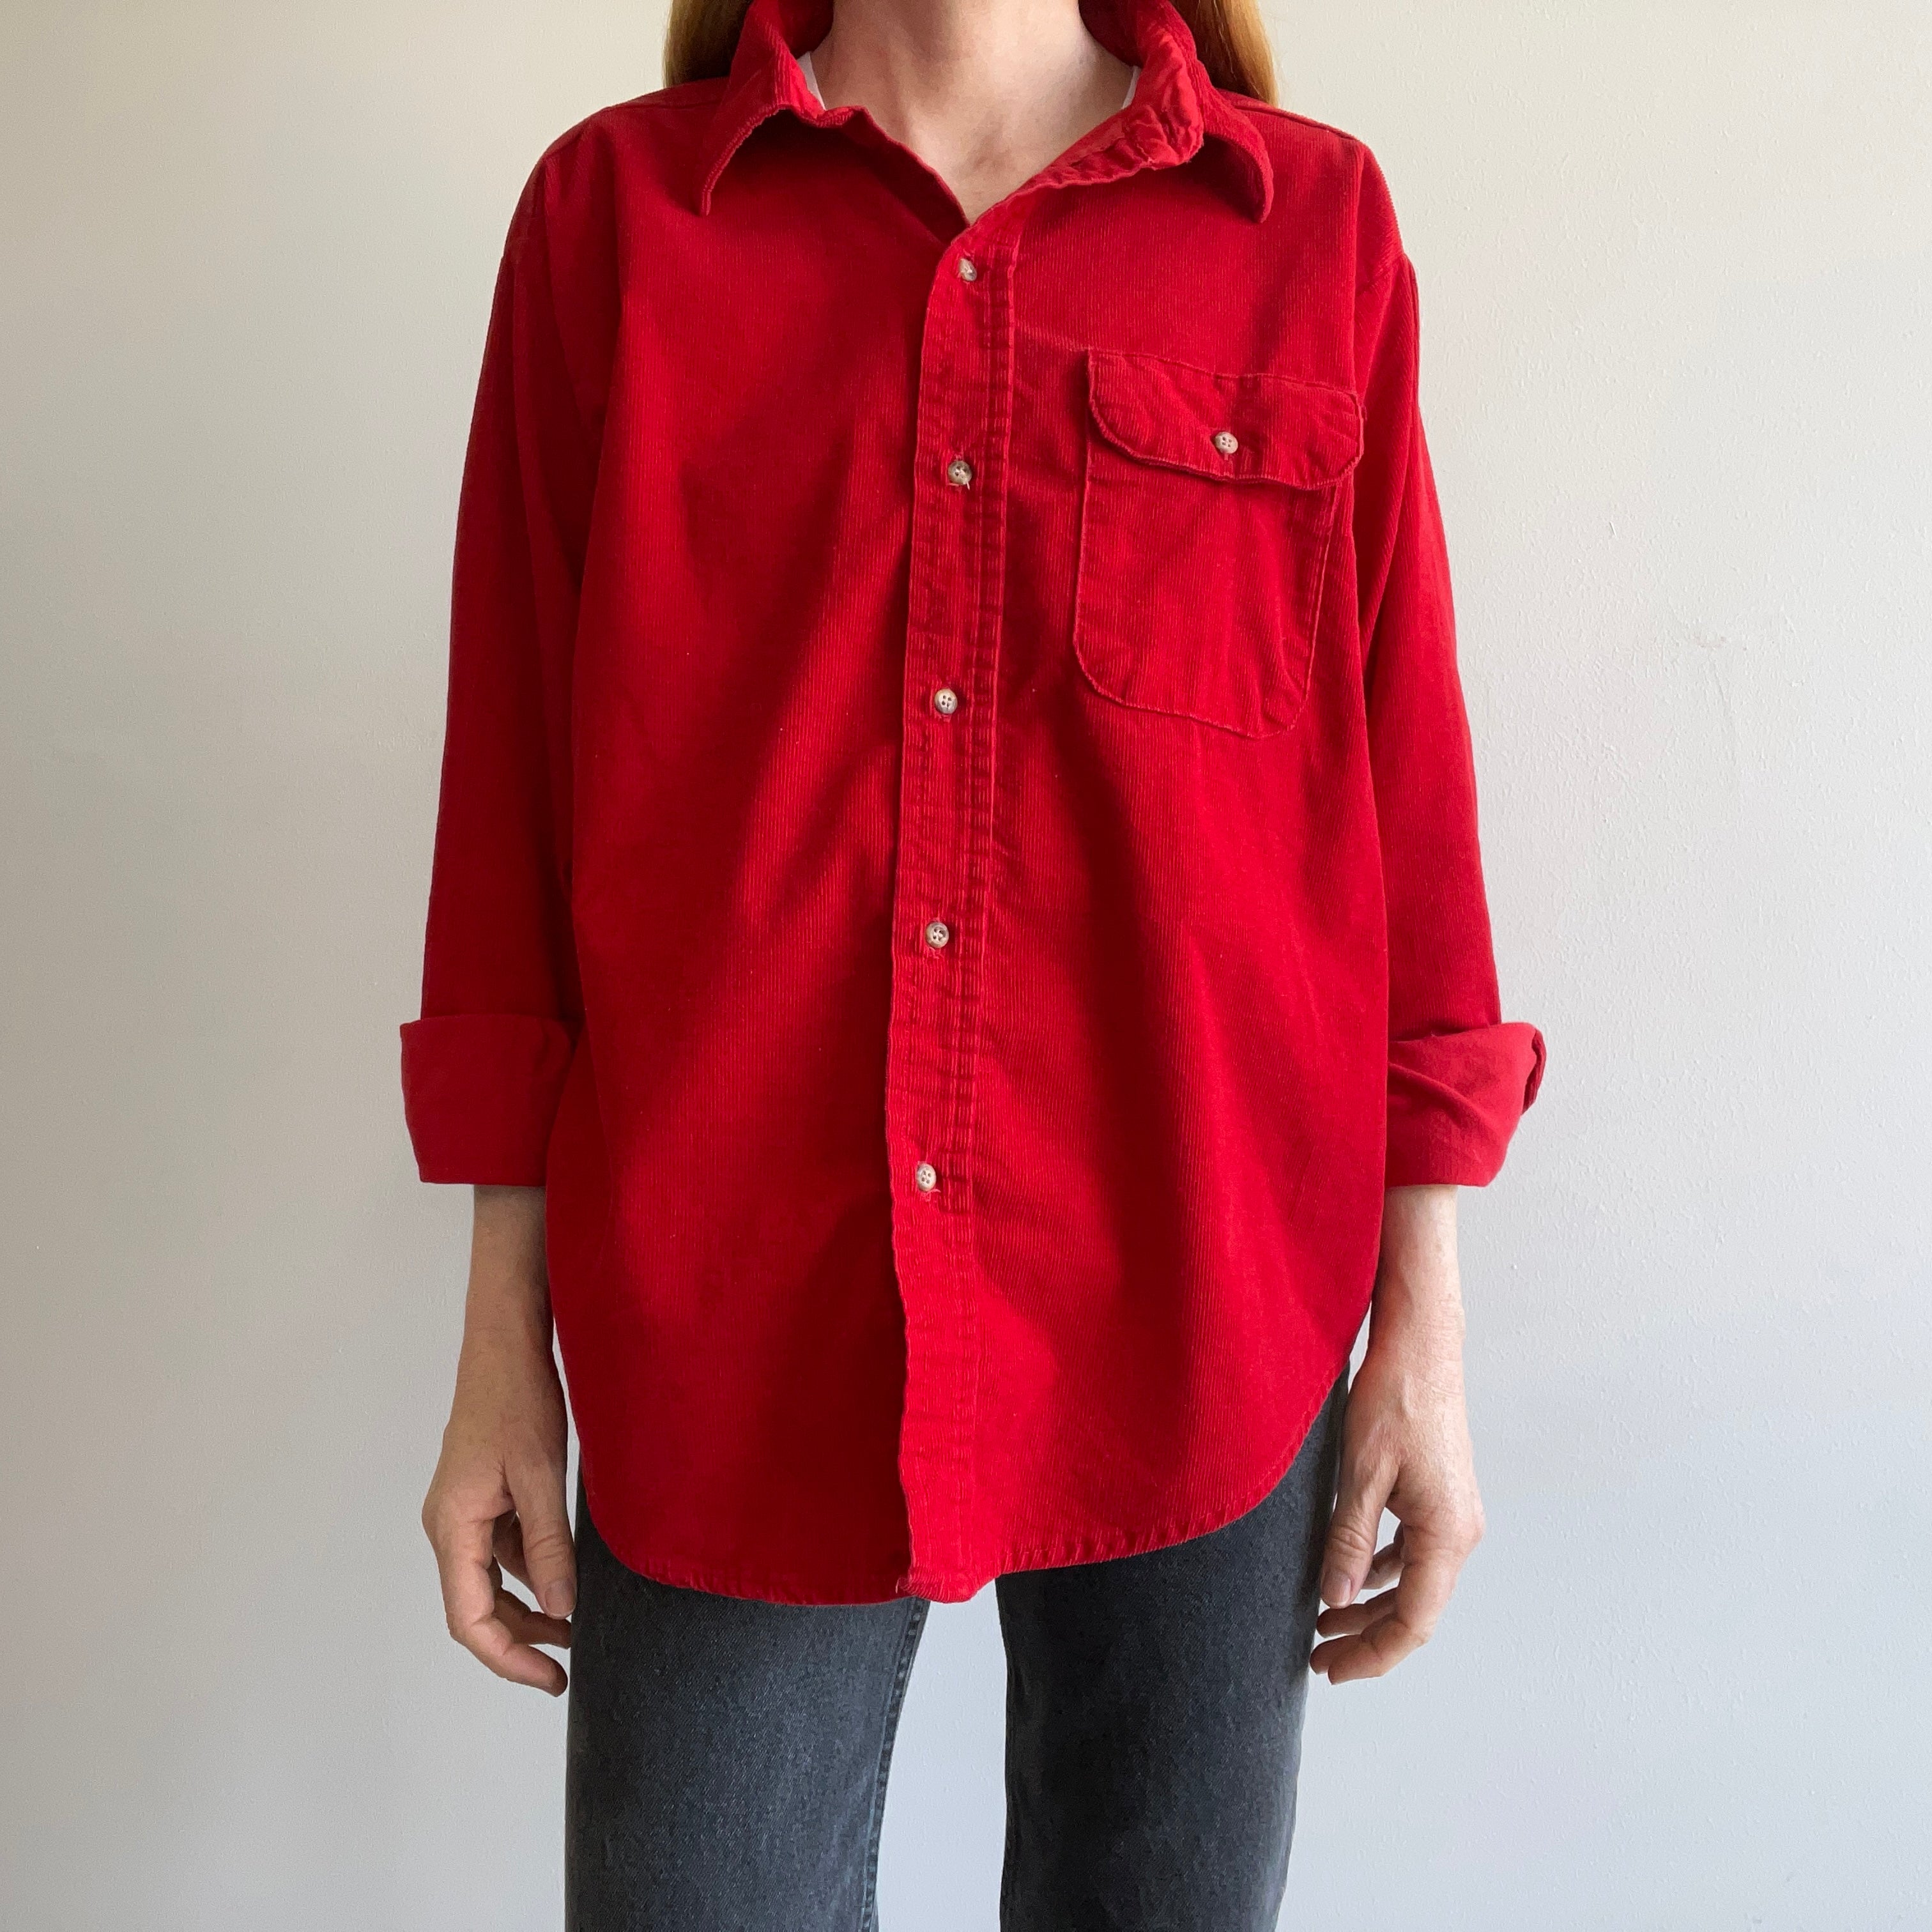 1980s Thin Wale Corduroy Red Dad Shirt